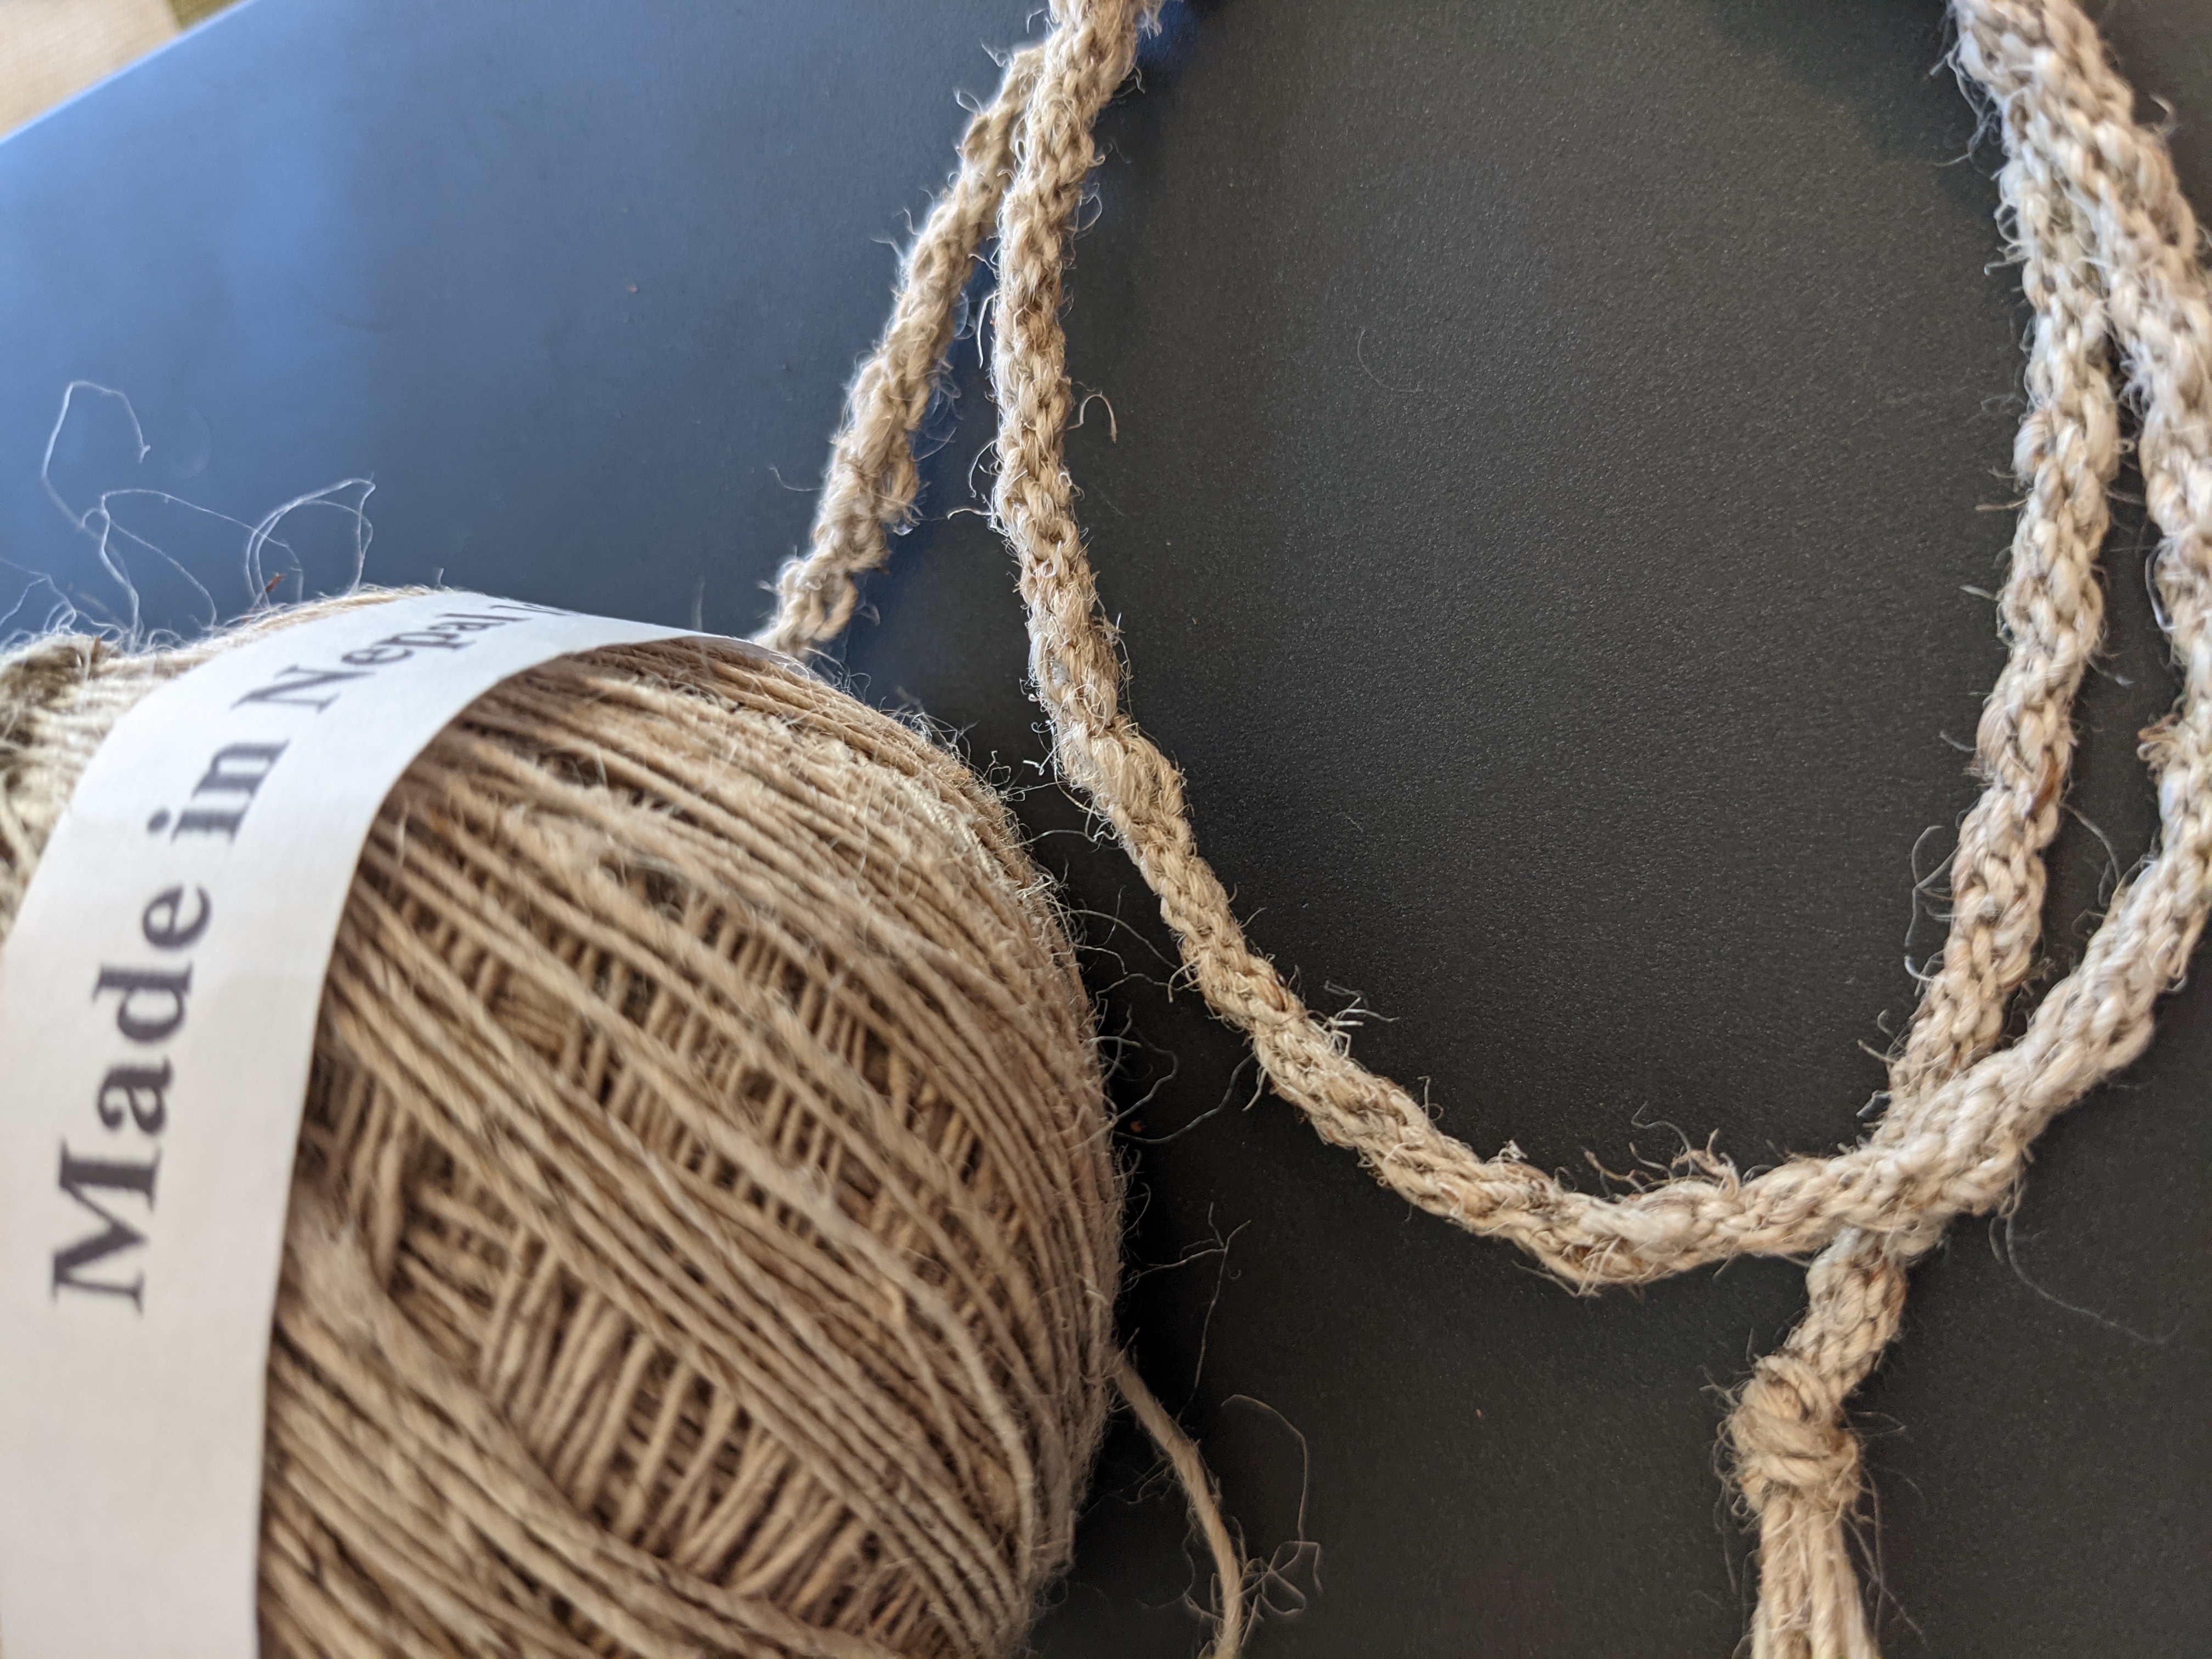 Nettle cord with yarn ball.